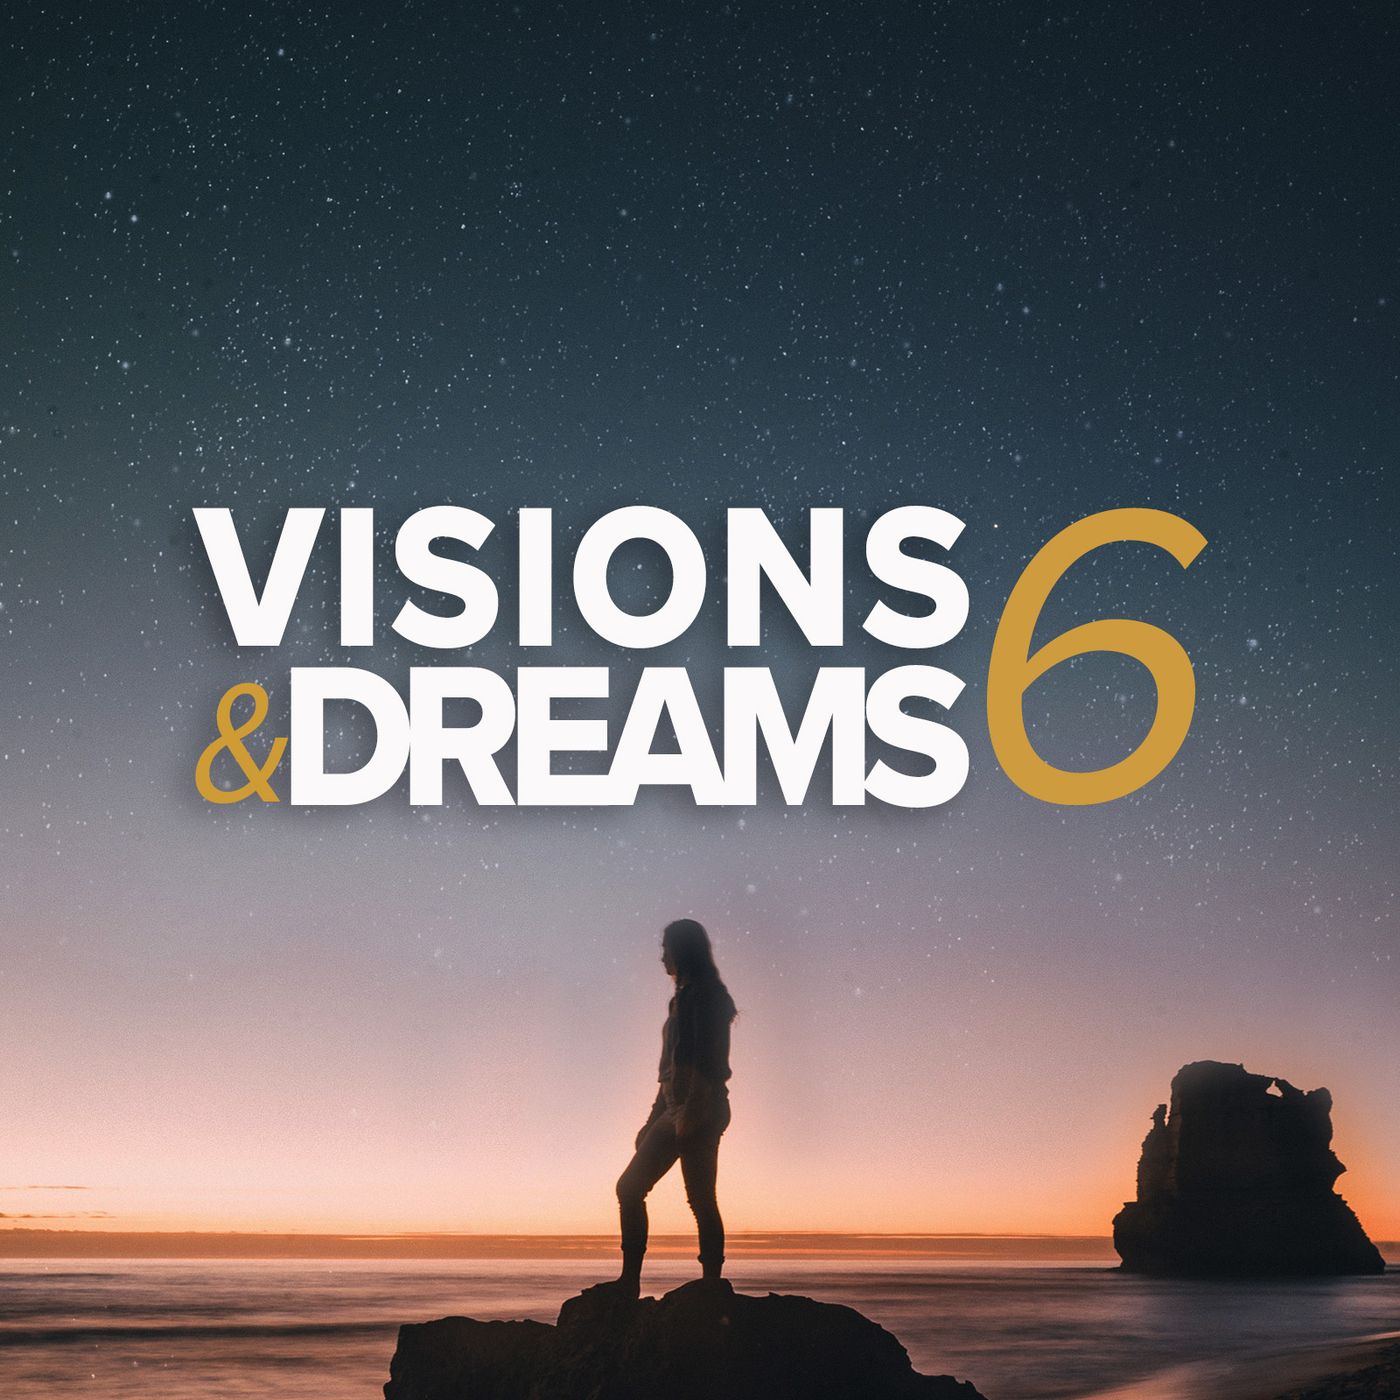 Visions & Dreams #6 :  Life Giving not Life Draining